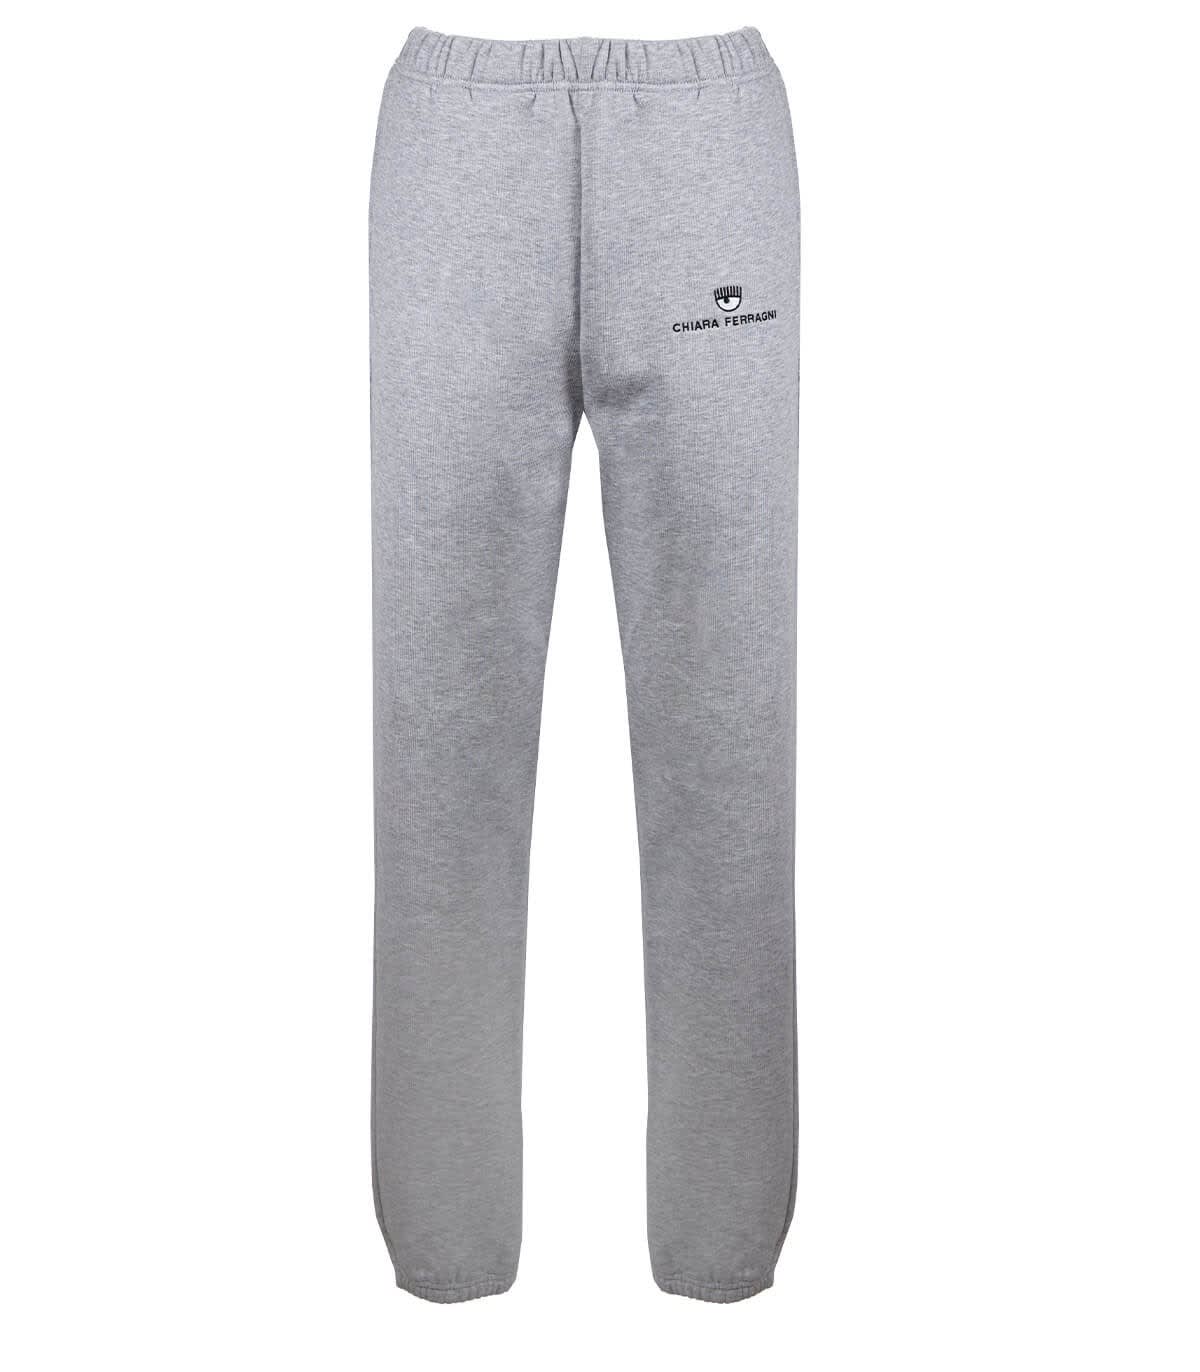 Chiara Ferragni Logo Basic Grey Sweatpants